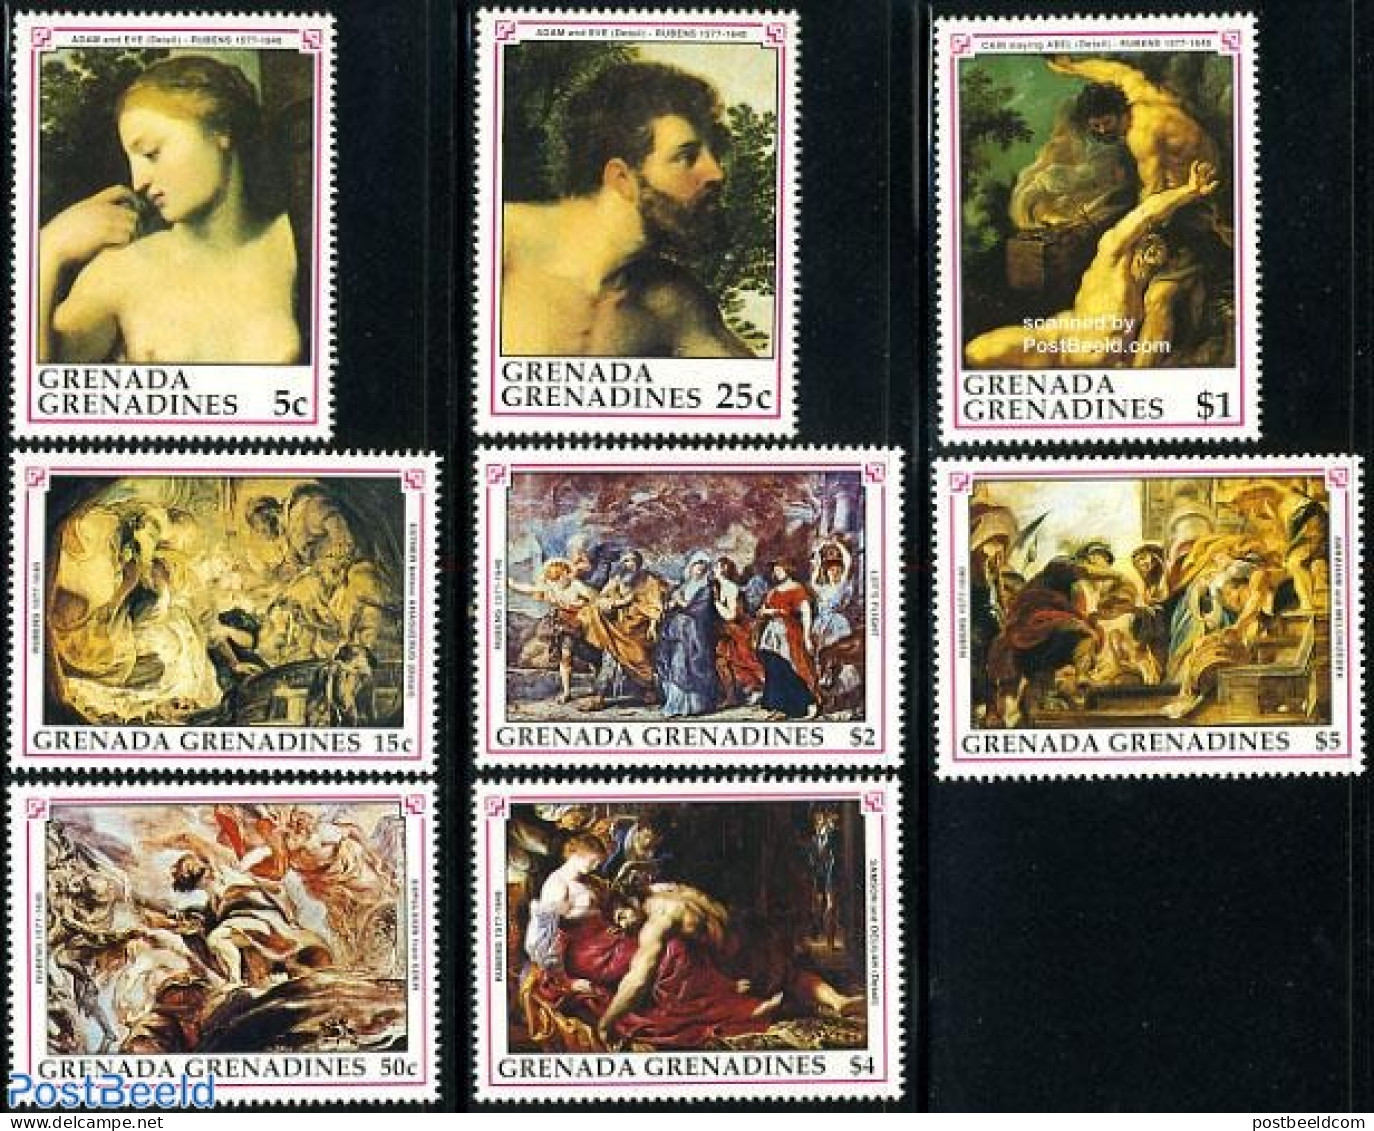 Grenada Grenadines 1991 P.P. Rubens 8v, Mint NH, Art - Nude Paintings - Paintings - Rubens - Grenada (1974-...)